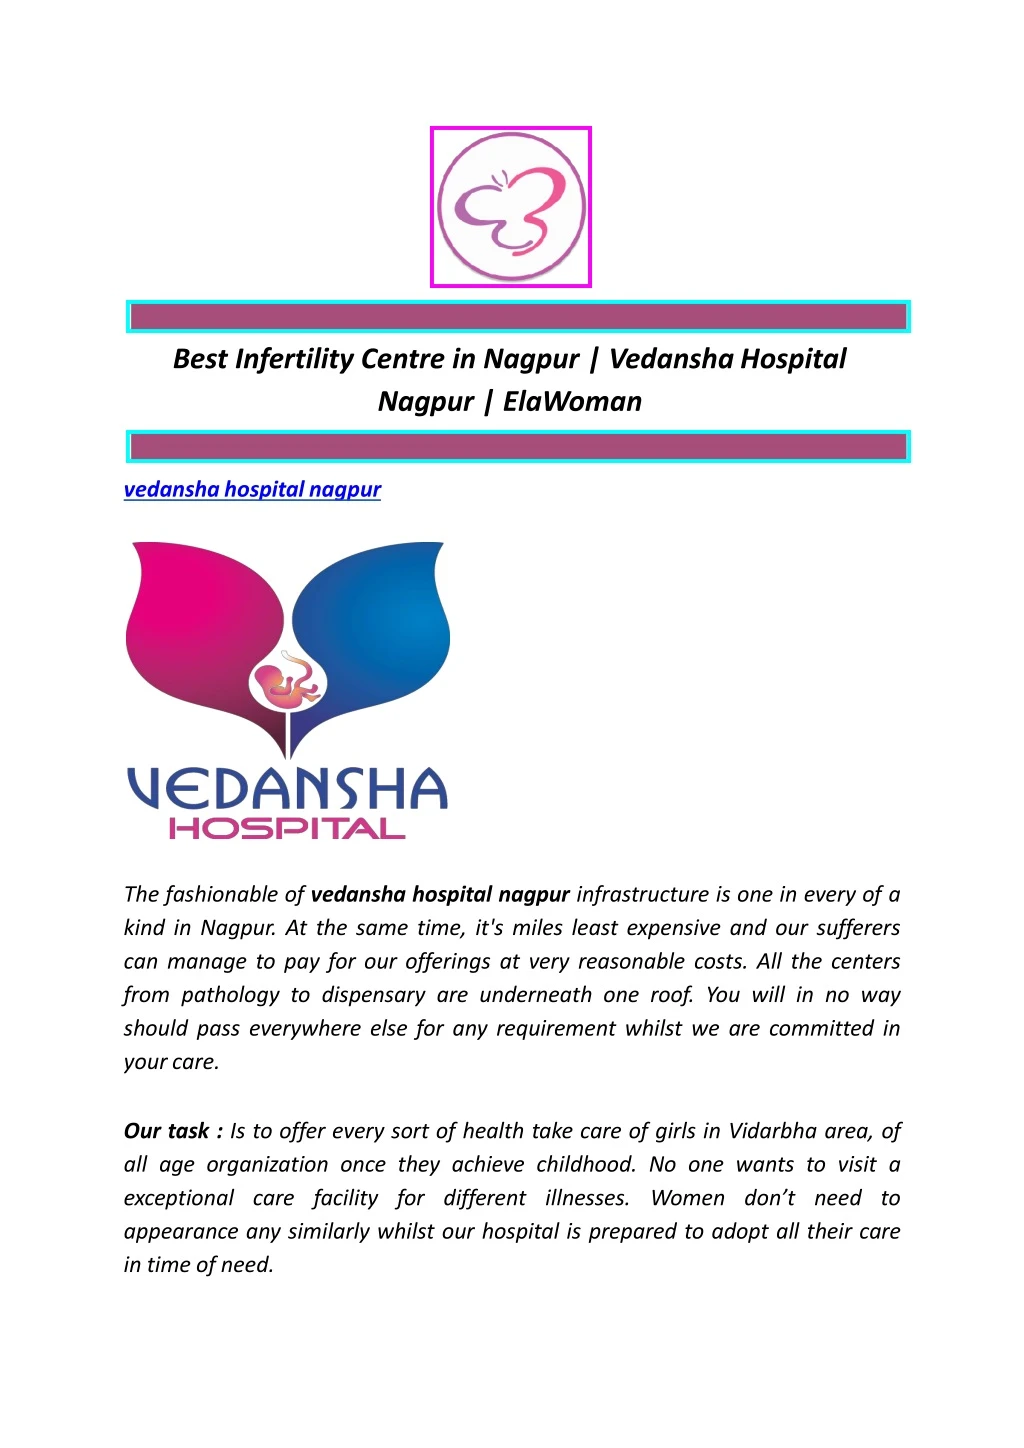 best infertility centre in nagpur vedansha